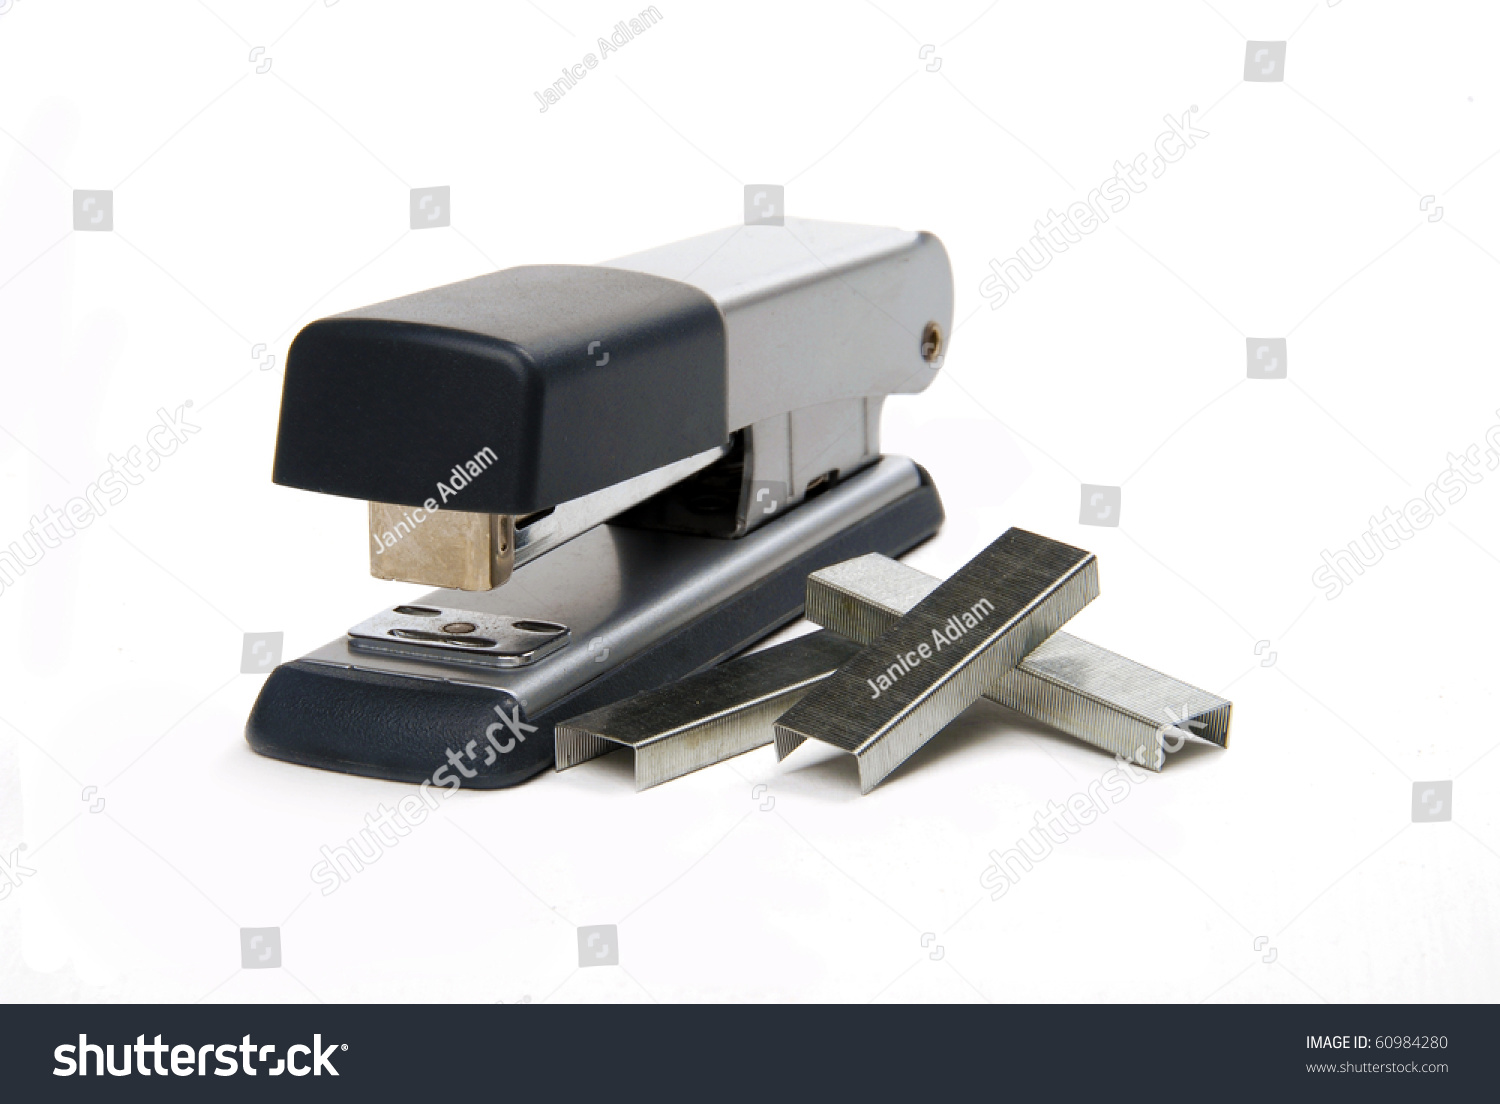 how to refill a stapler